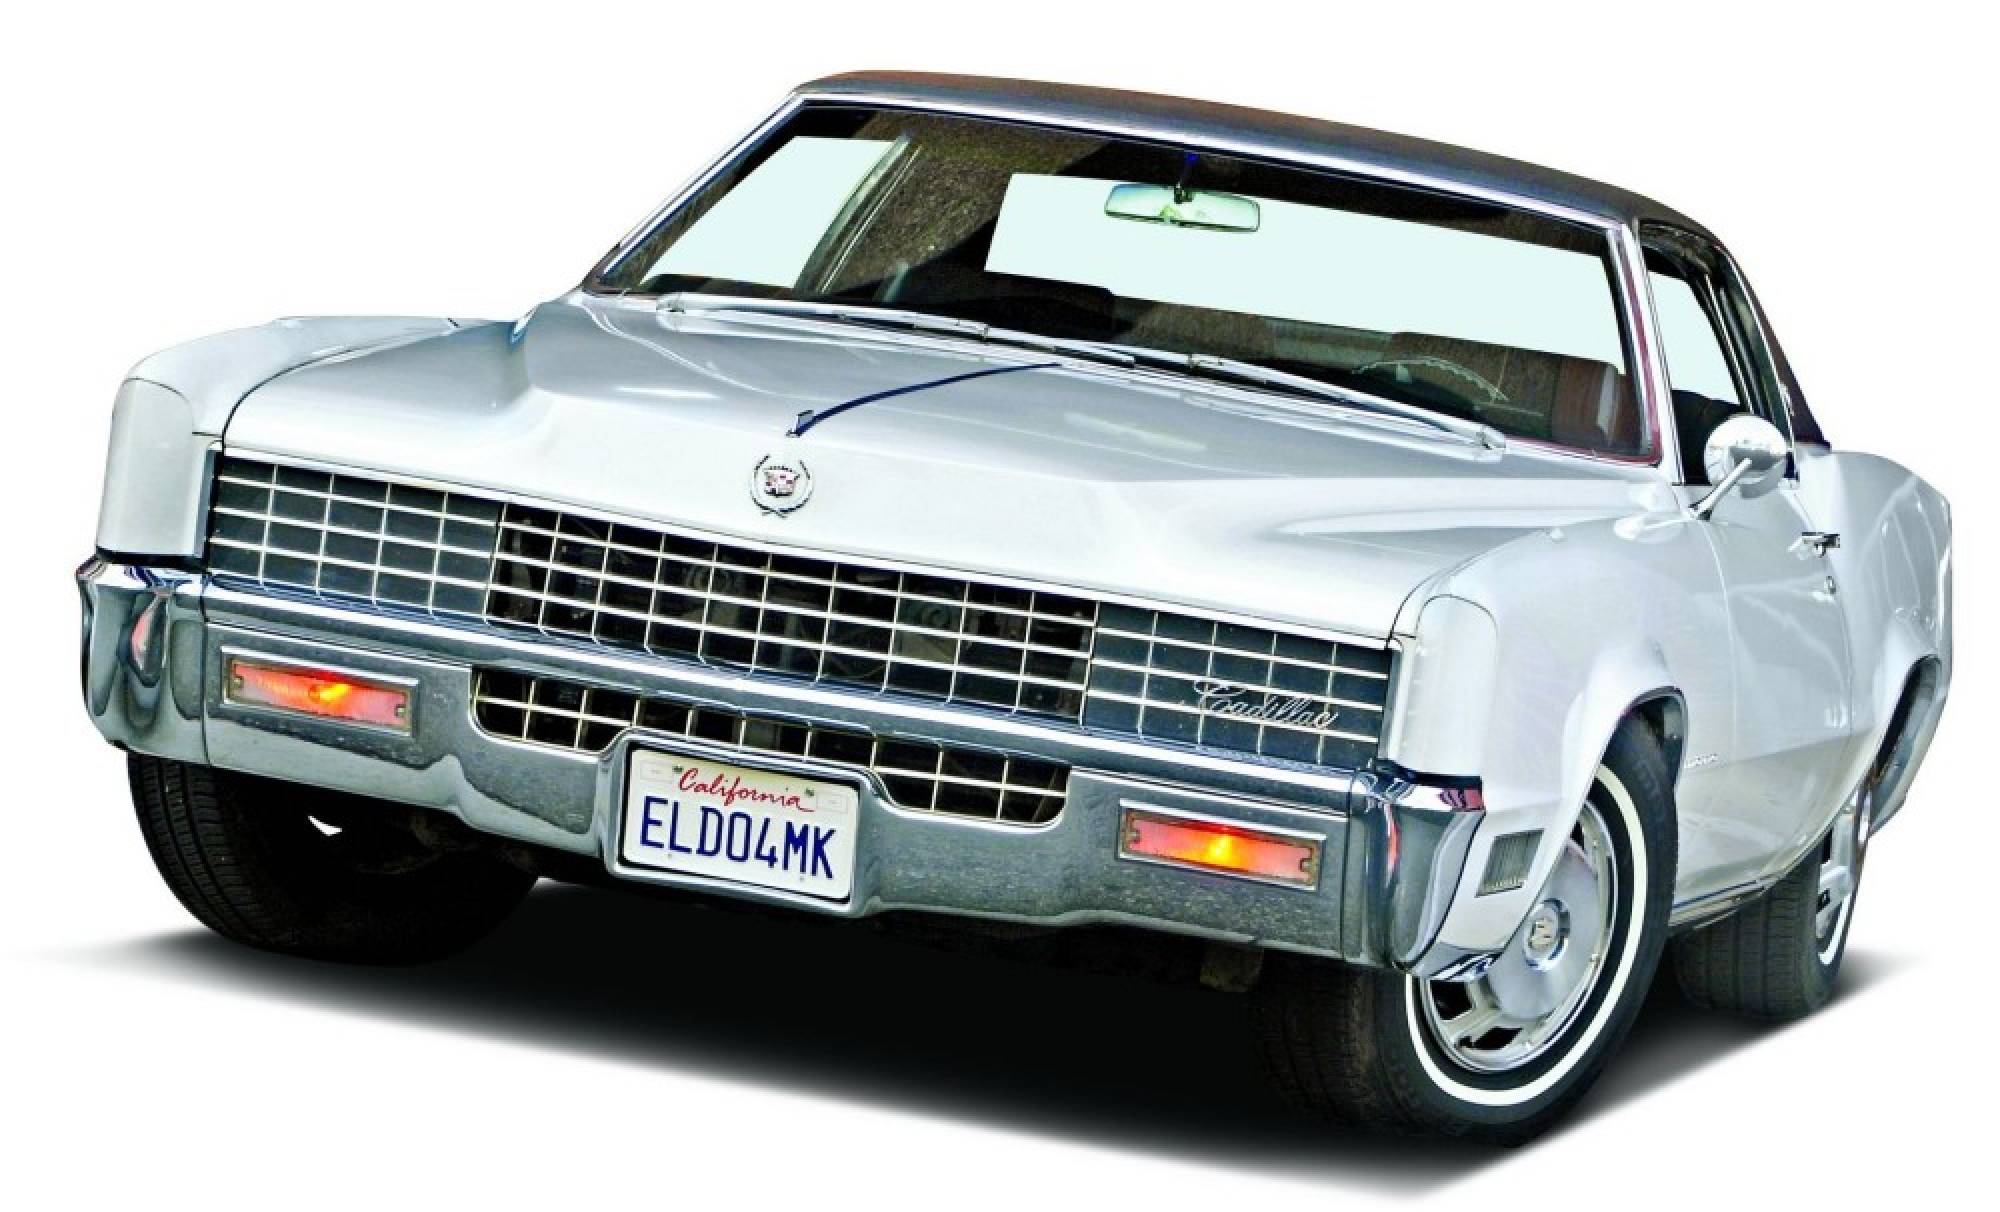 1967 Cadillac Eldorado Backgrounds on Wallpapers Vista